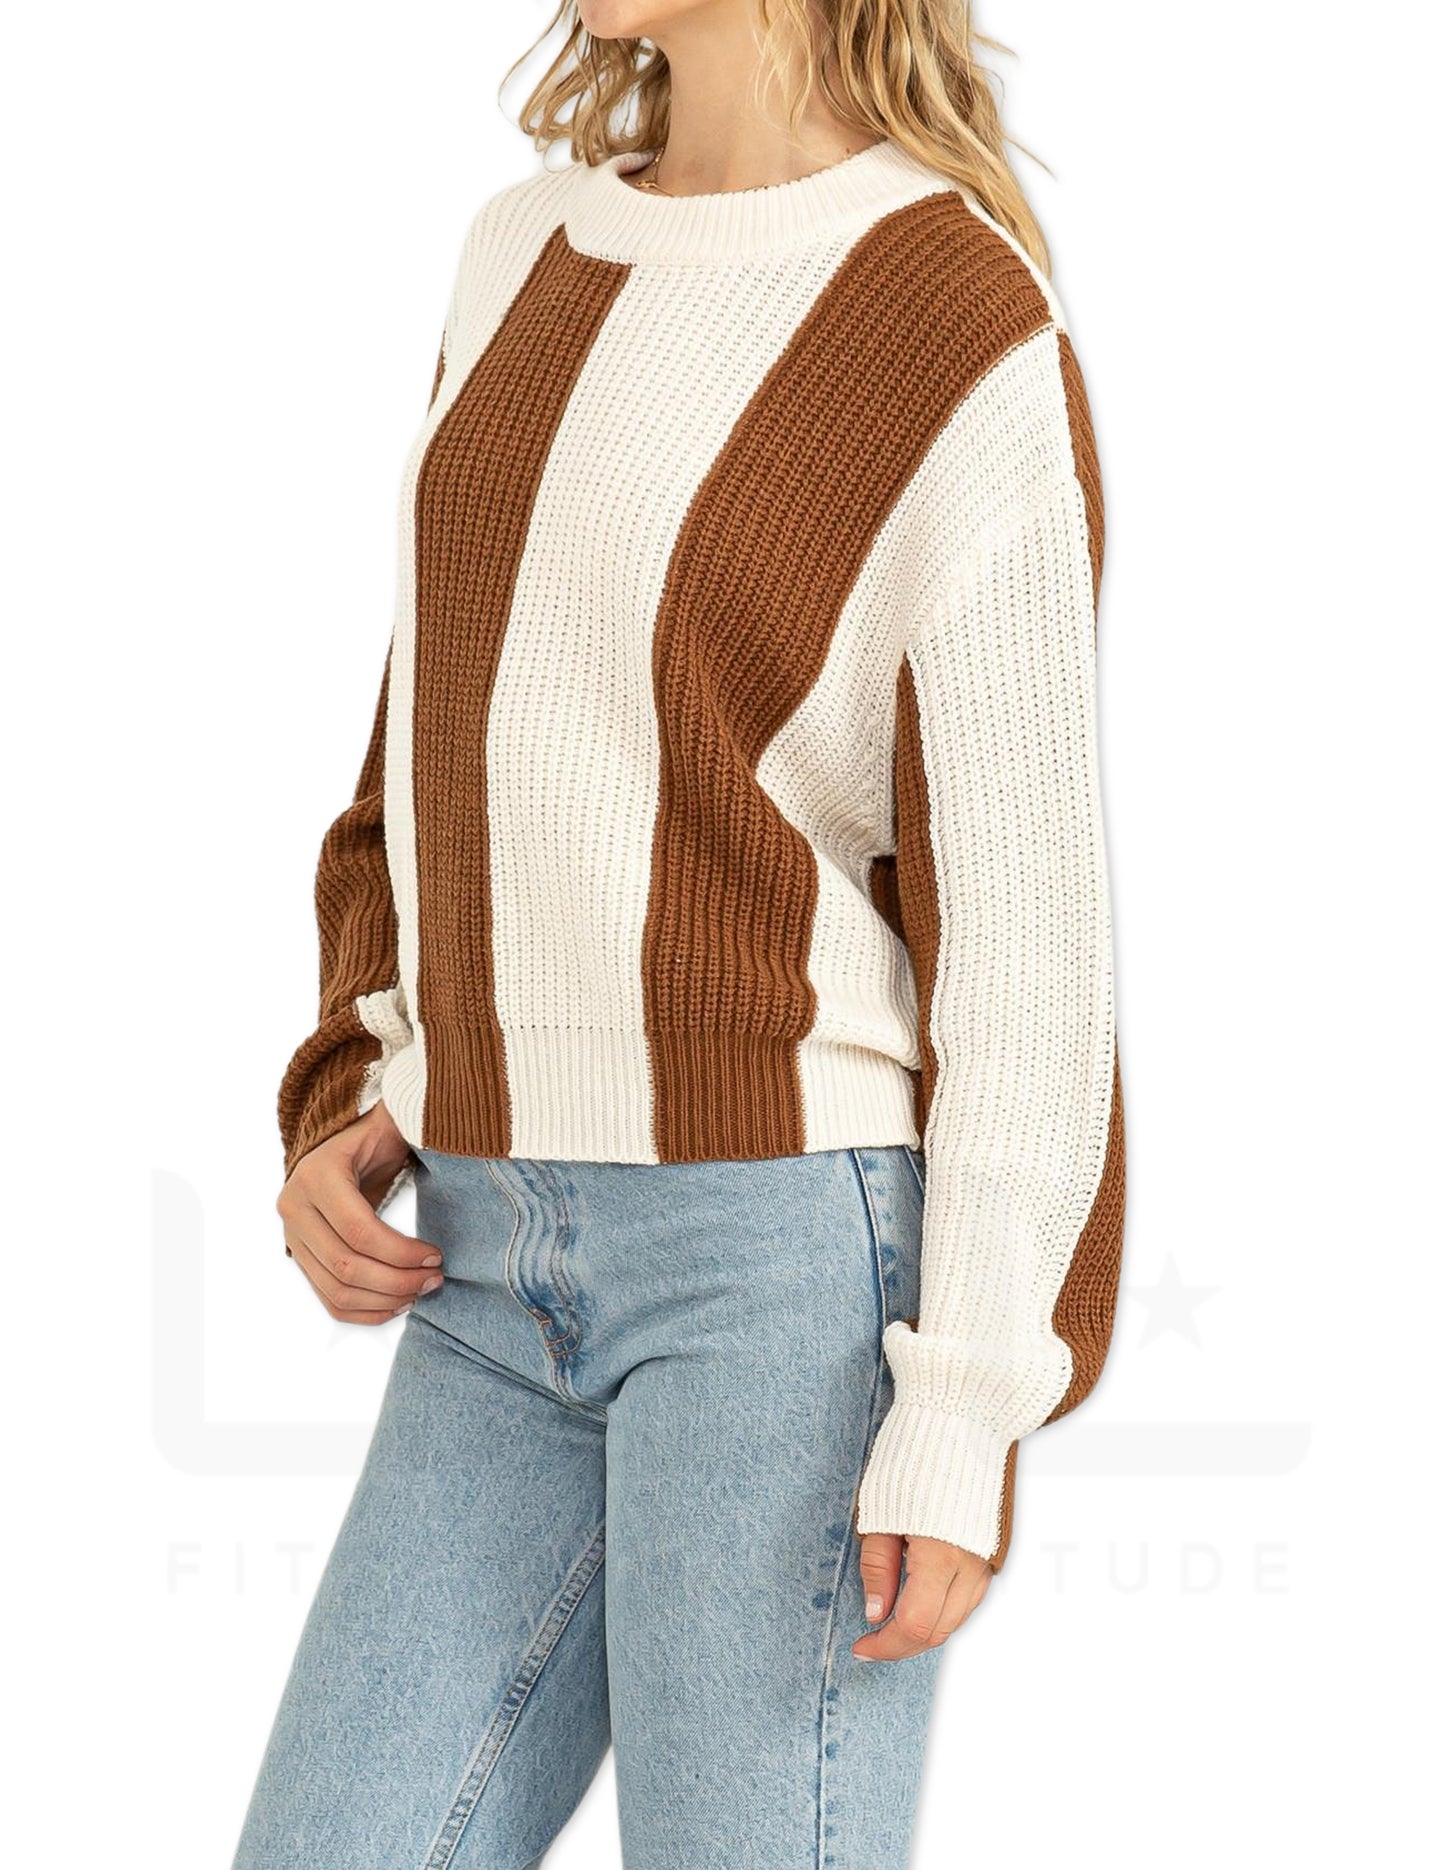 Vertical Stripe Sweater - Brown and Cream